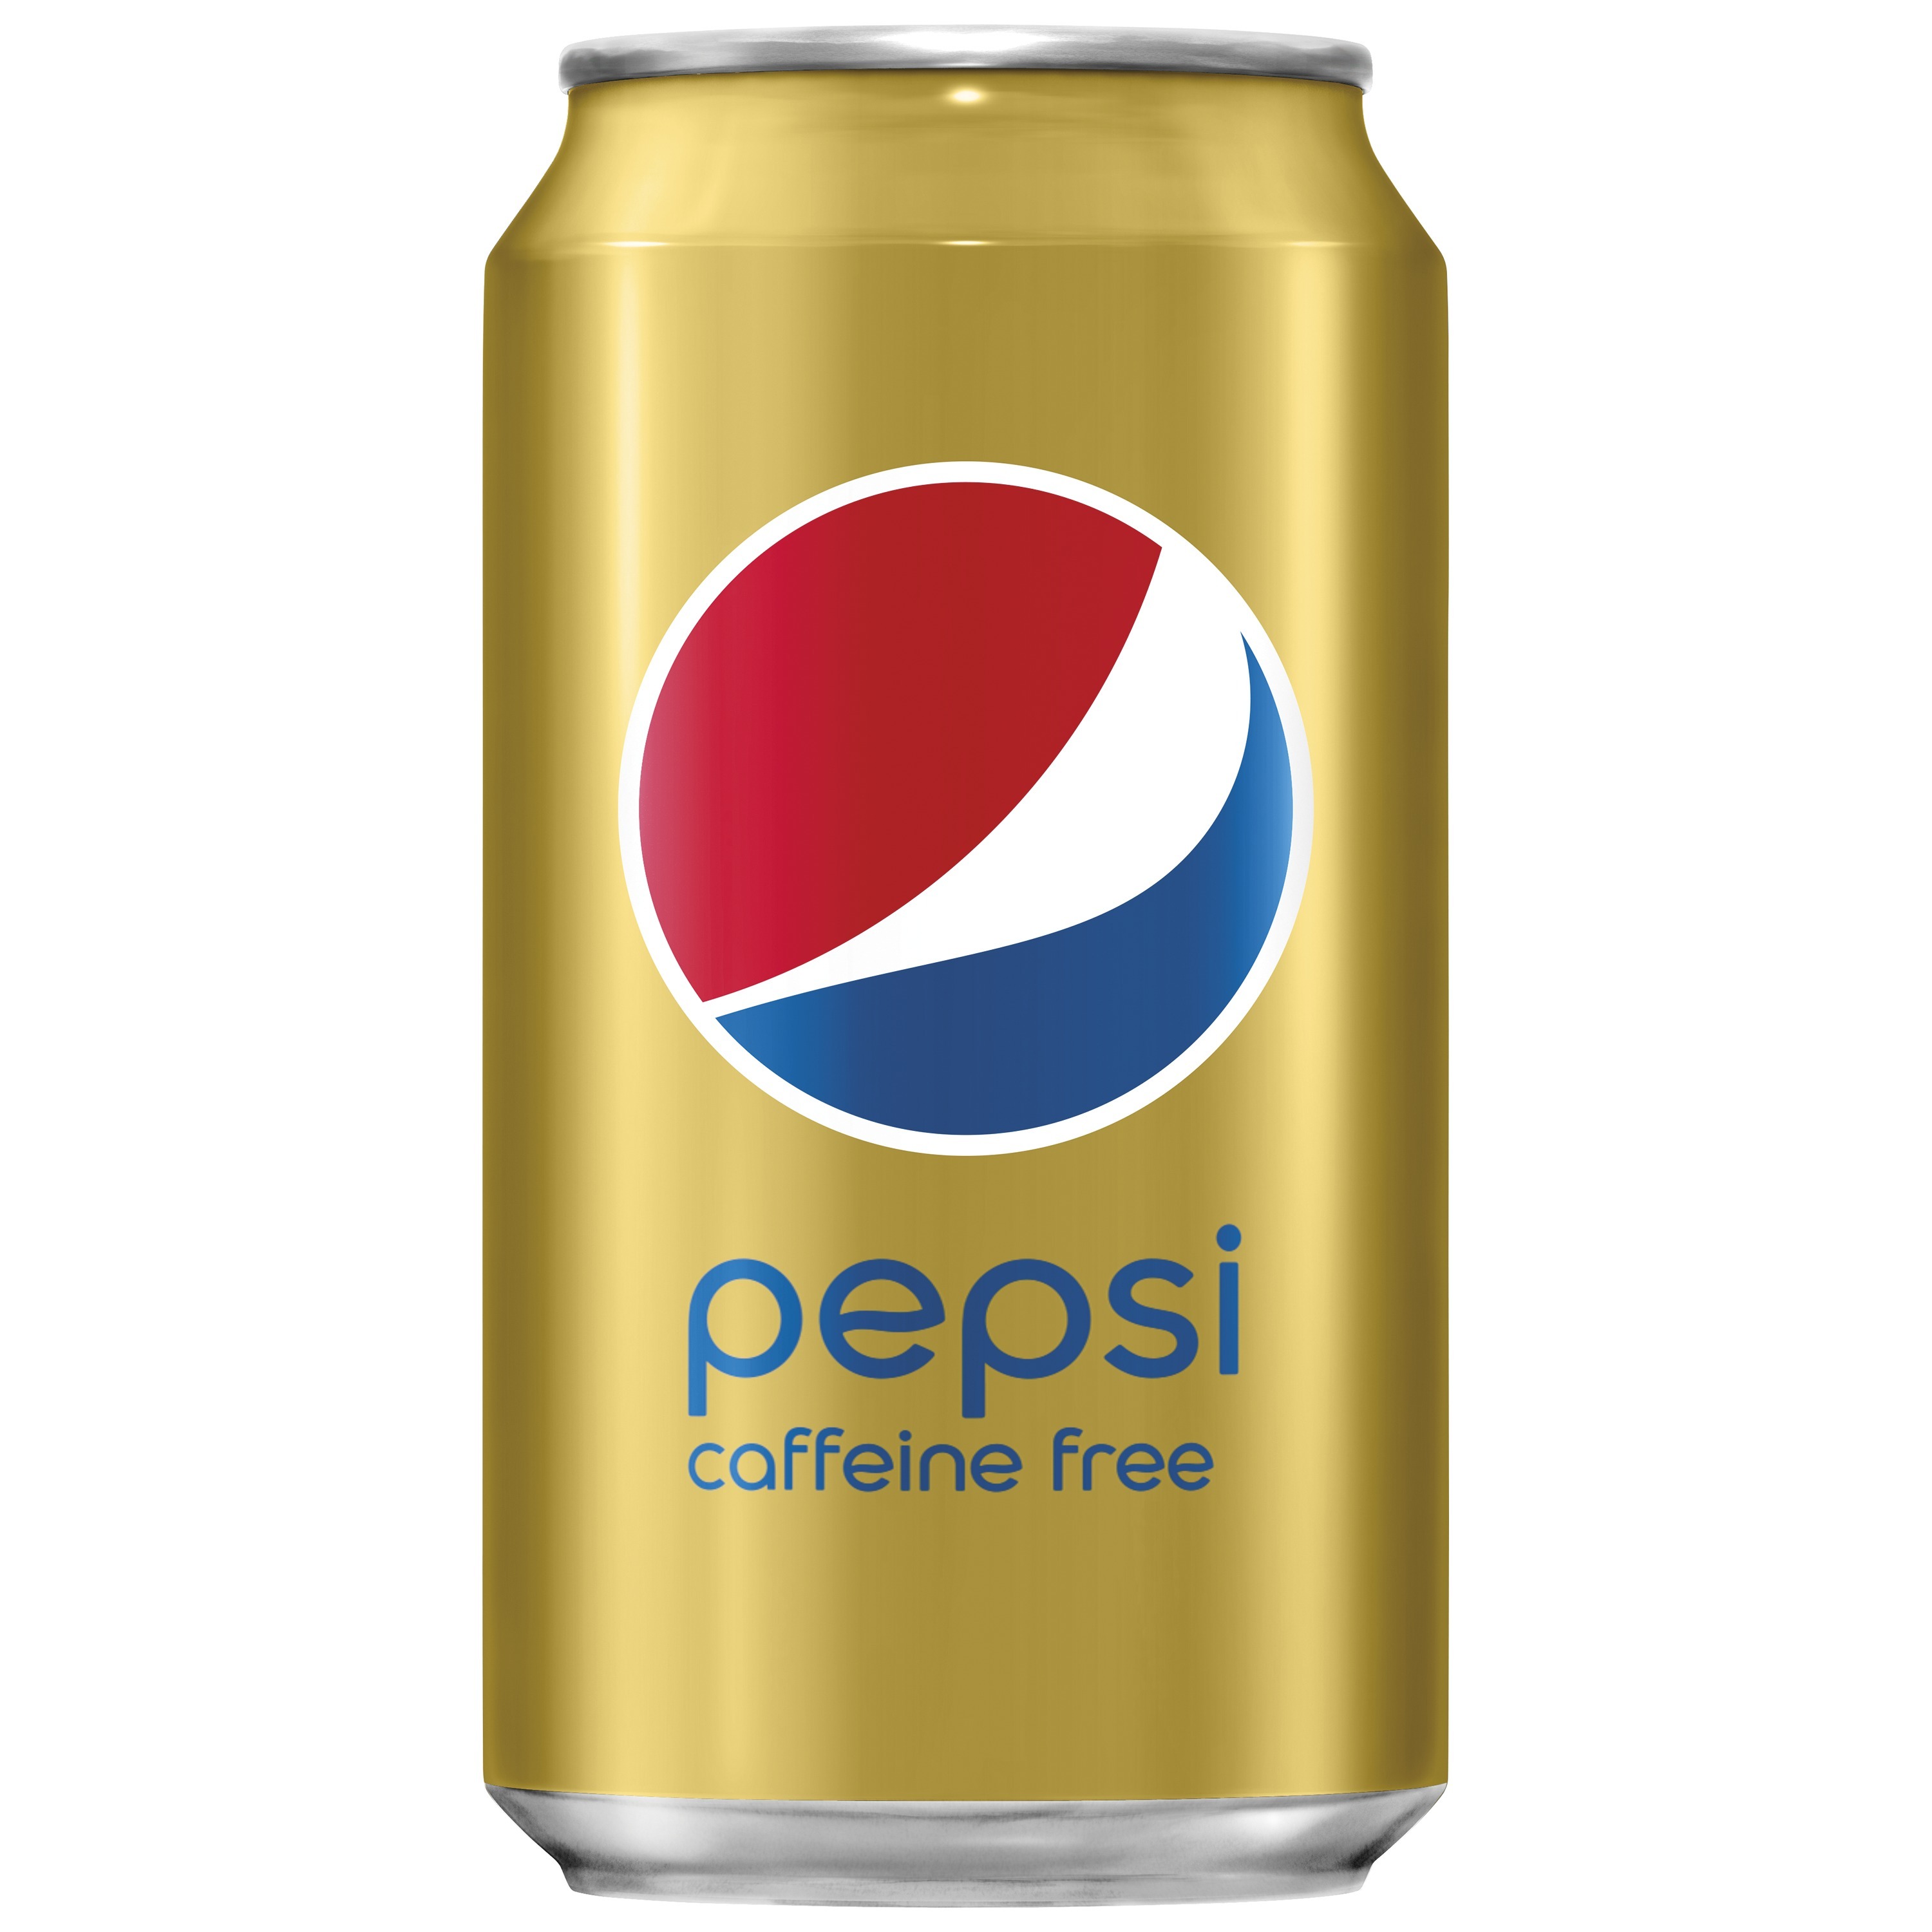 Pepsi, Caffeine Free - SmartLabel™